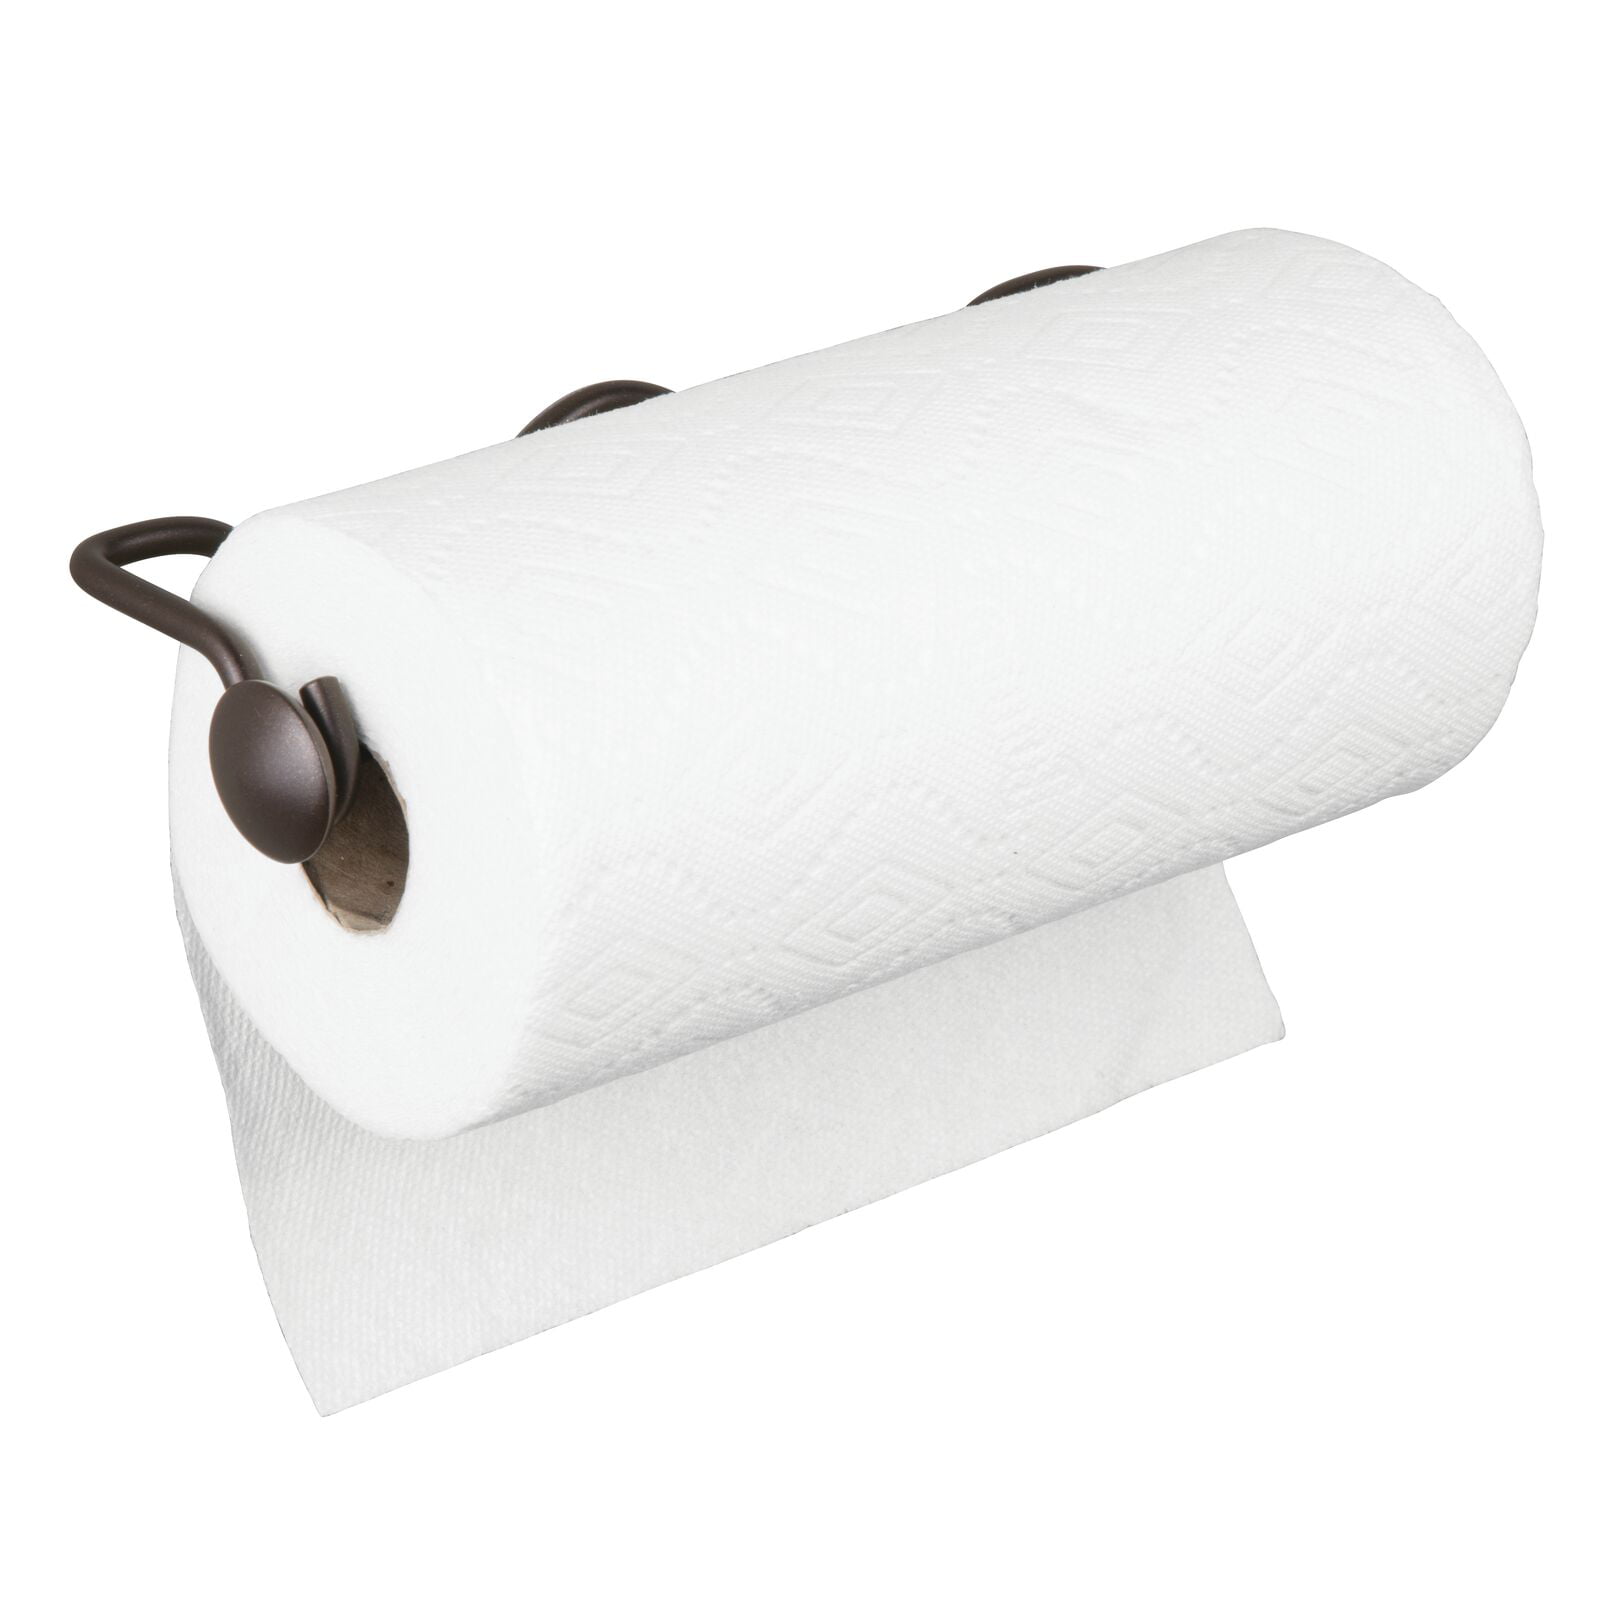 PHANCIR Kitchen Paper Towel Holder Wall Mount Under Cabinet Self Adhesive/Drilling  Kitchen Paper Holder Matte Brushed Nickel 